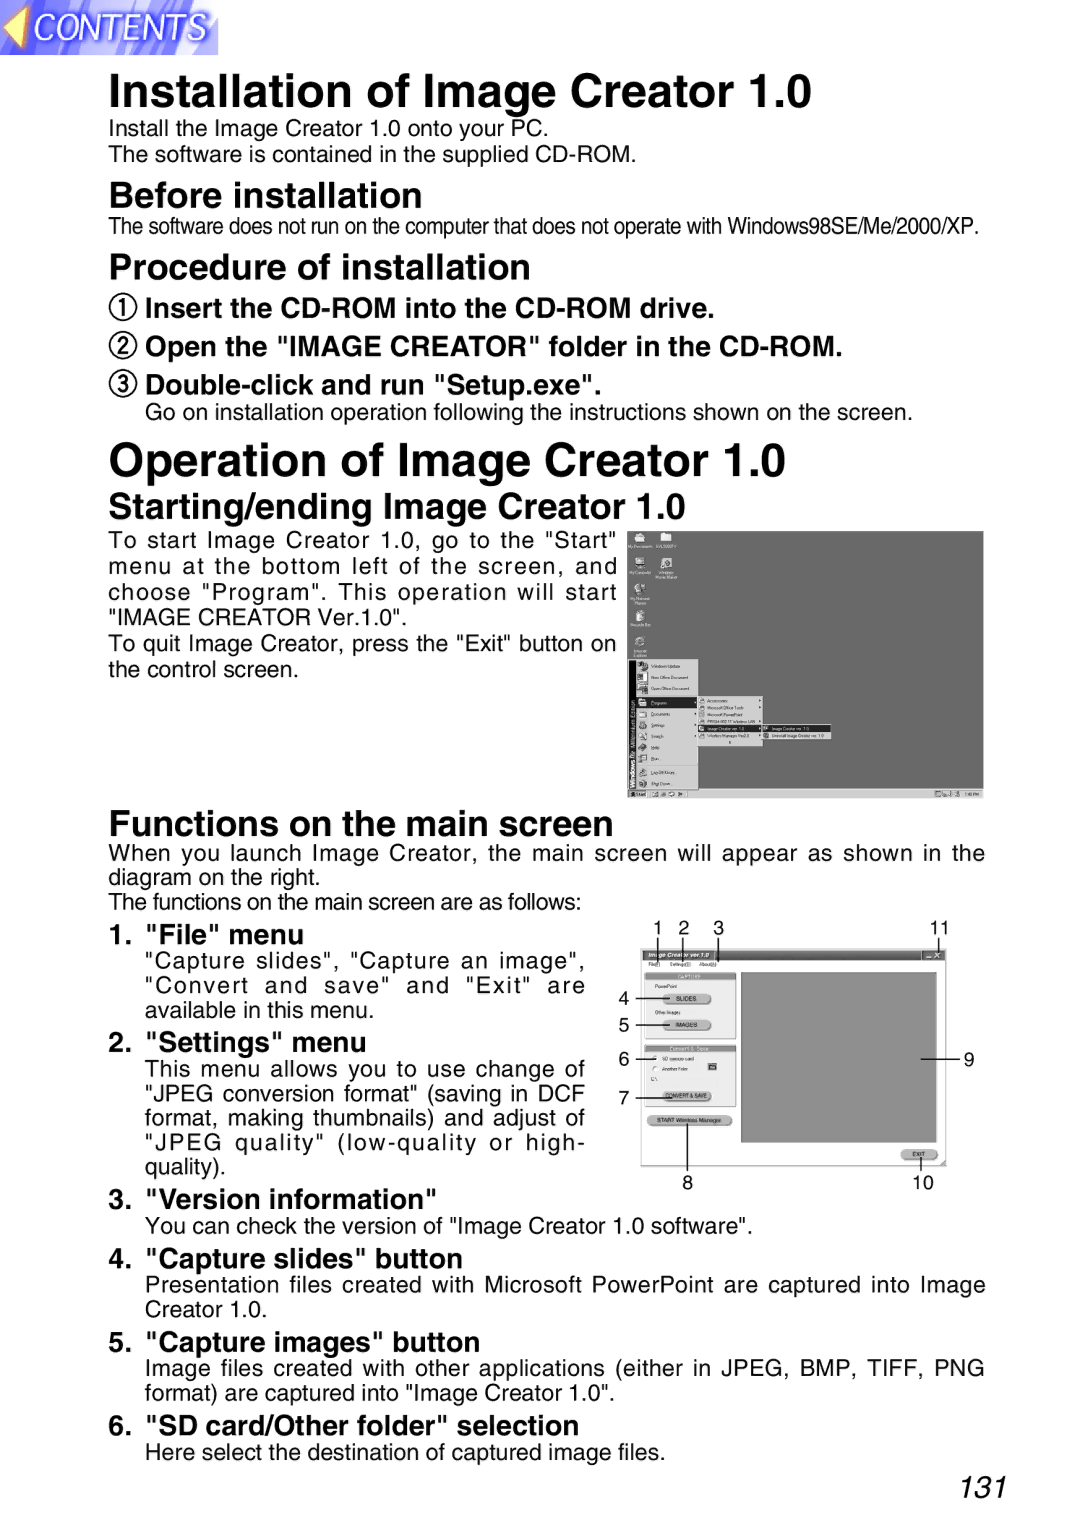 Panasonic PT-L750U R, TQBH9003-6 Installation of Image Creator, Operation of Image Creator, Starting/ending Image Creator 